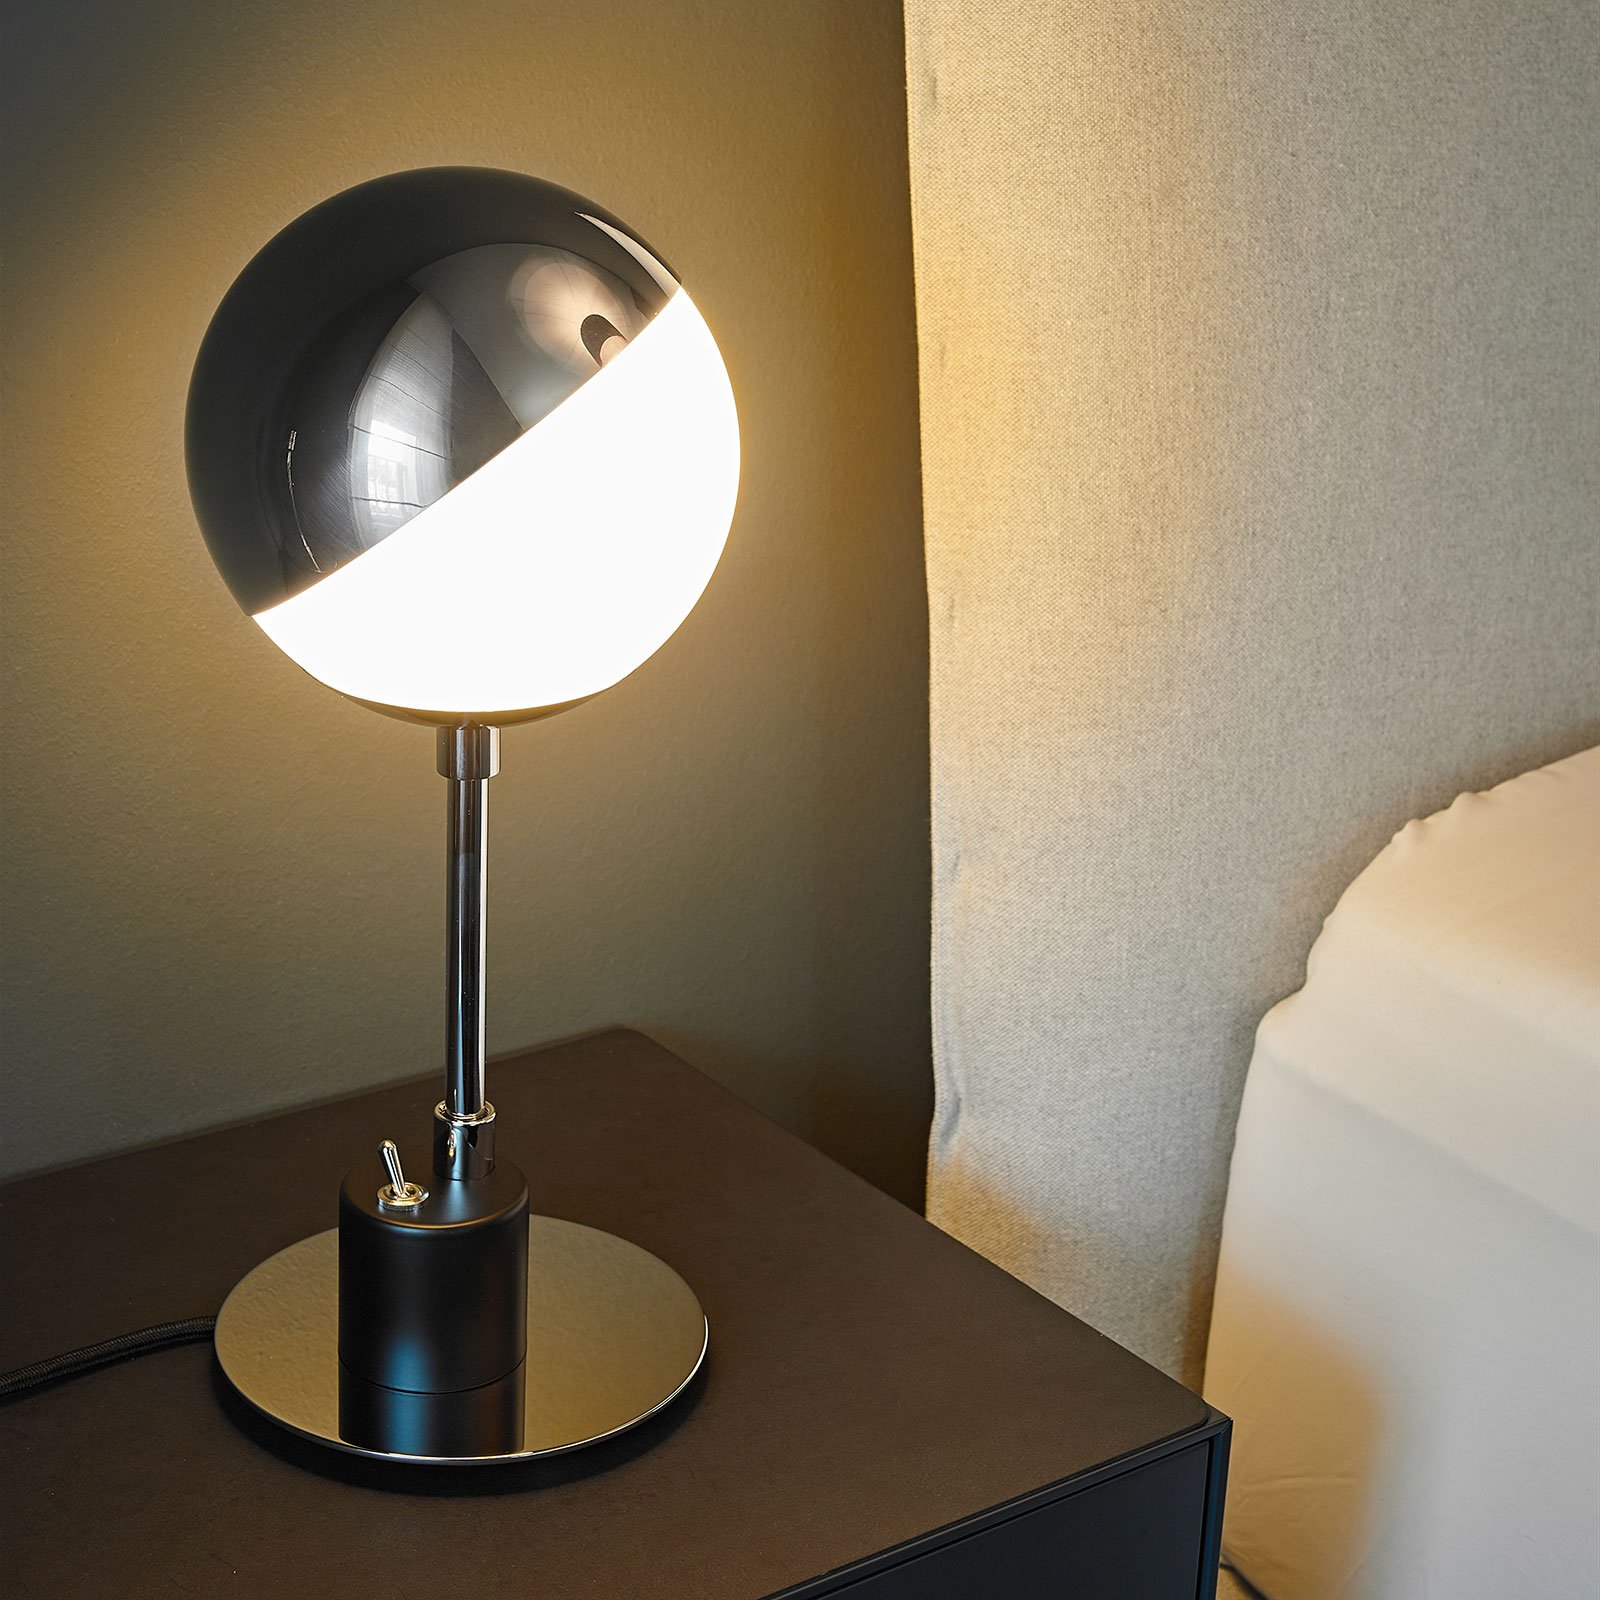 Designer table lamp with hemisphere